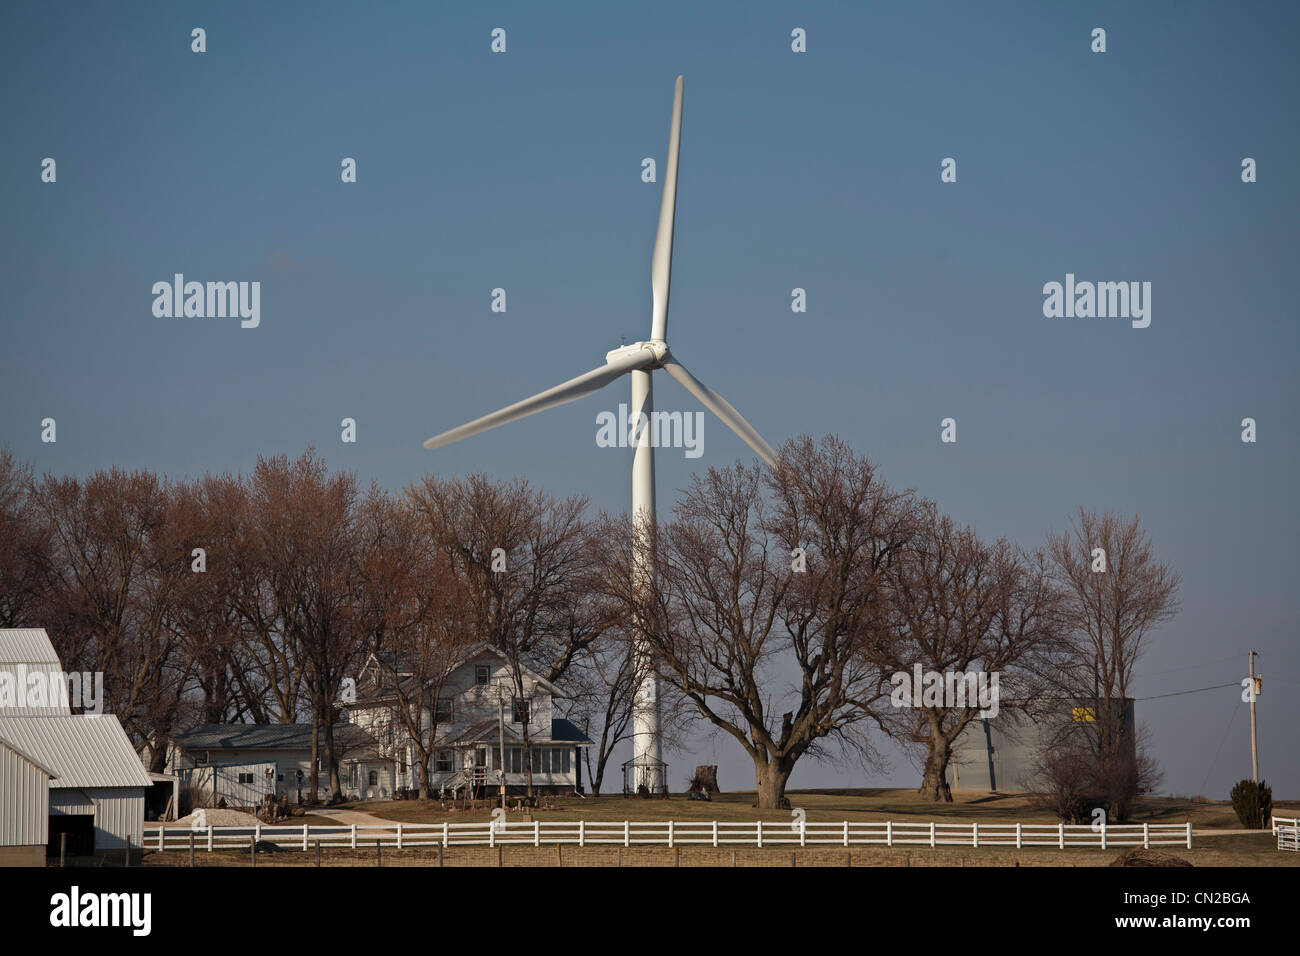 Galva, Iowa - A wind turbine on a farm in western Iowa. Stock Photo